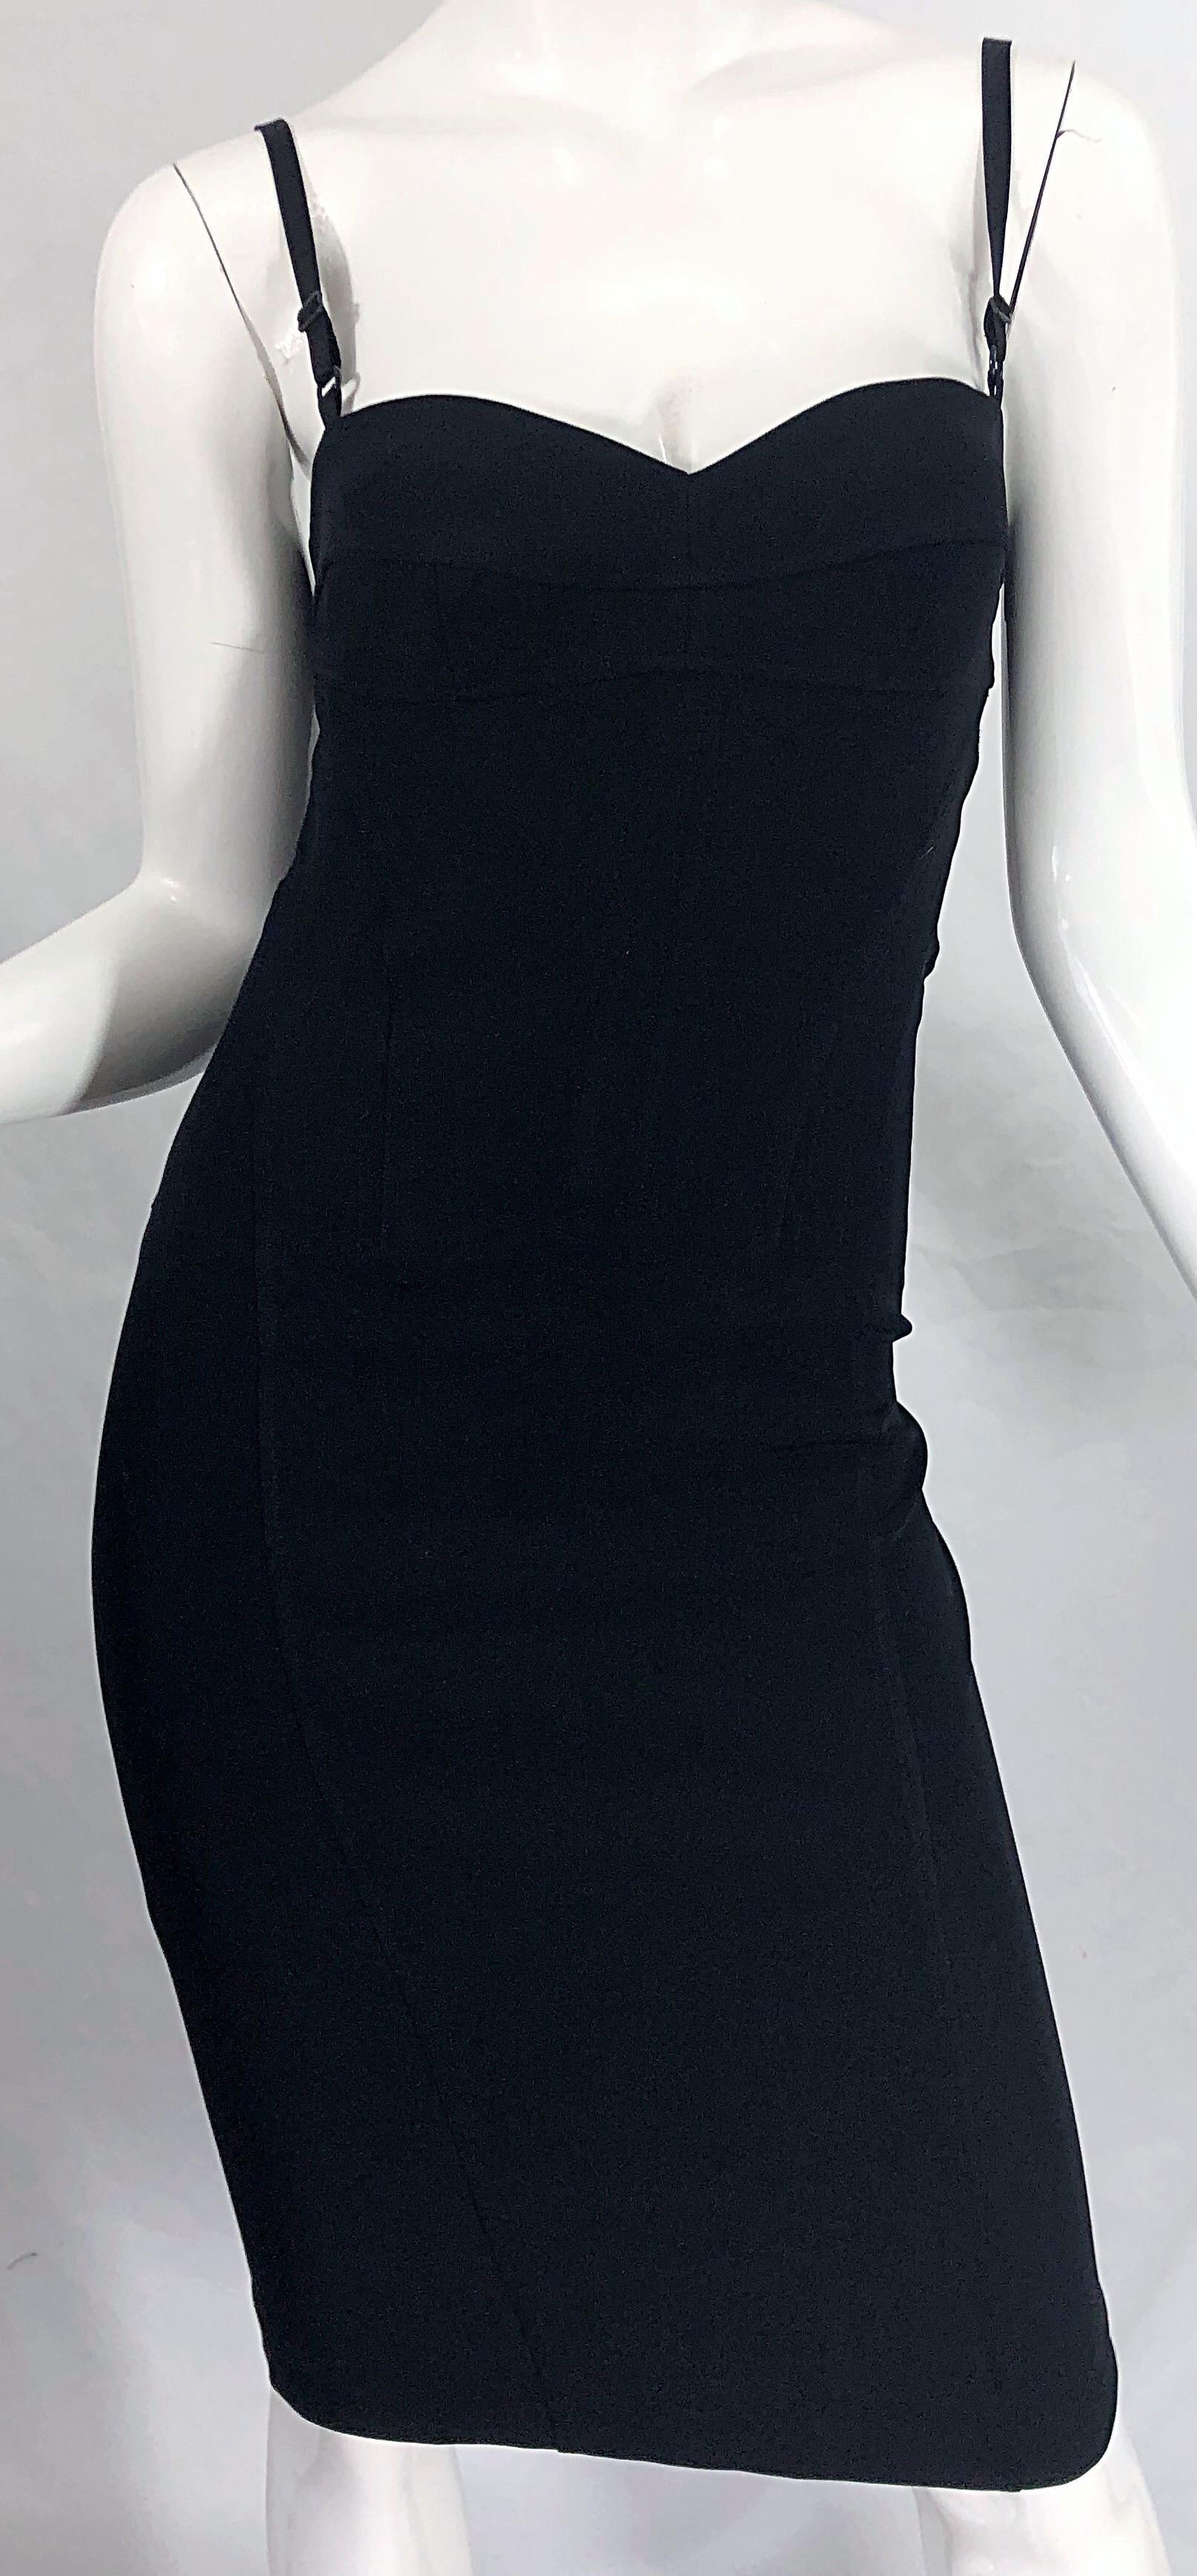 1990s Dolce & Gabbana Black Corset Dress Size 42 US 6 - 8 Vintage 90s Iconic LBD For Sale 1